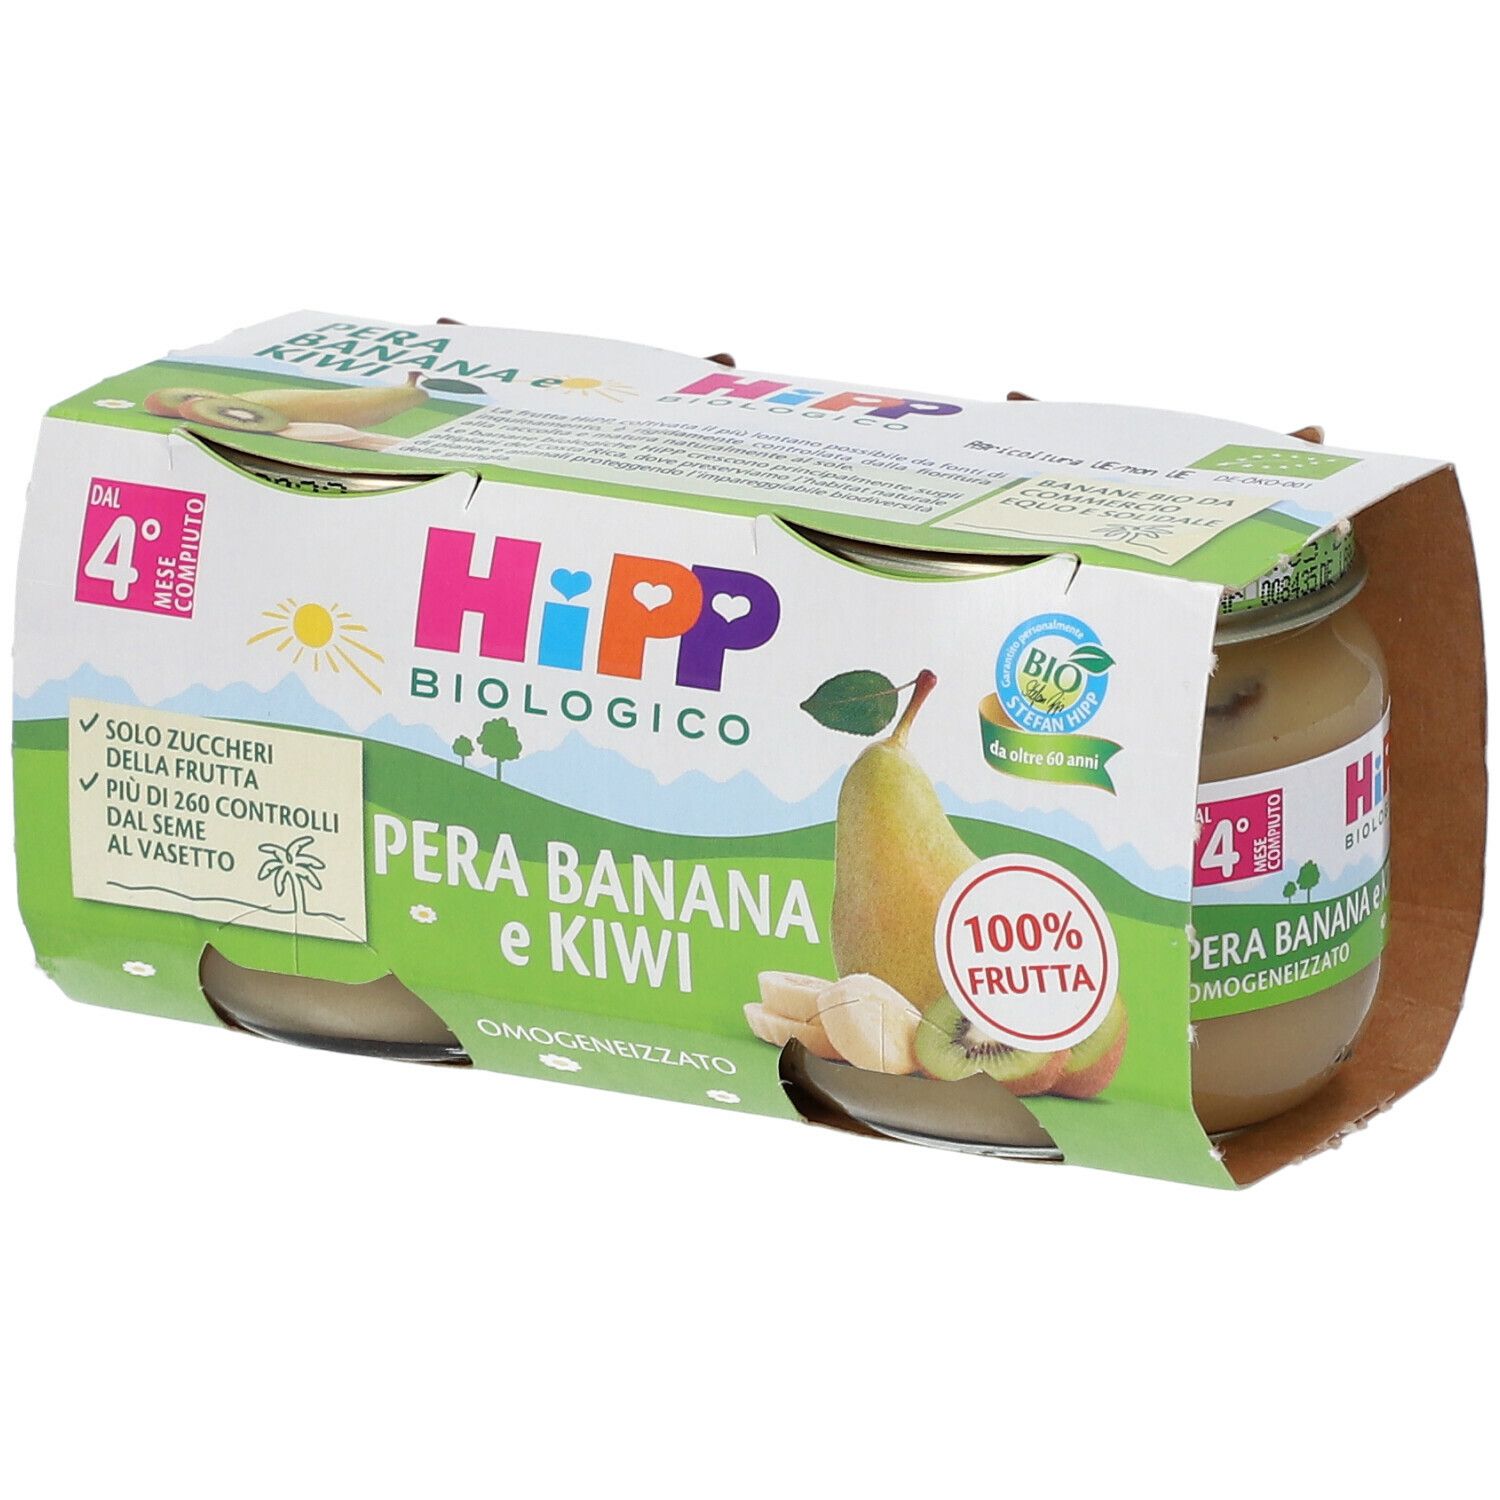 HiPP Biologico Pera Banana e Kiwi